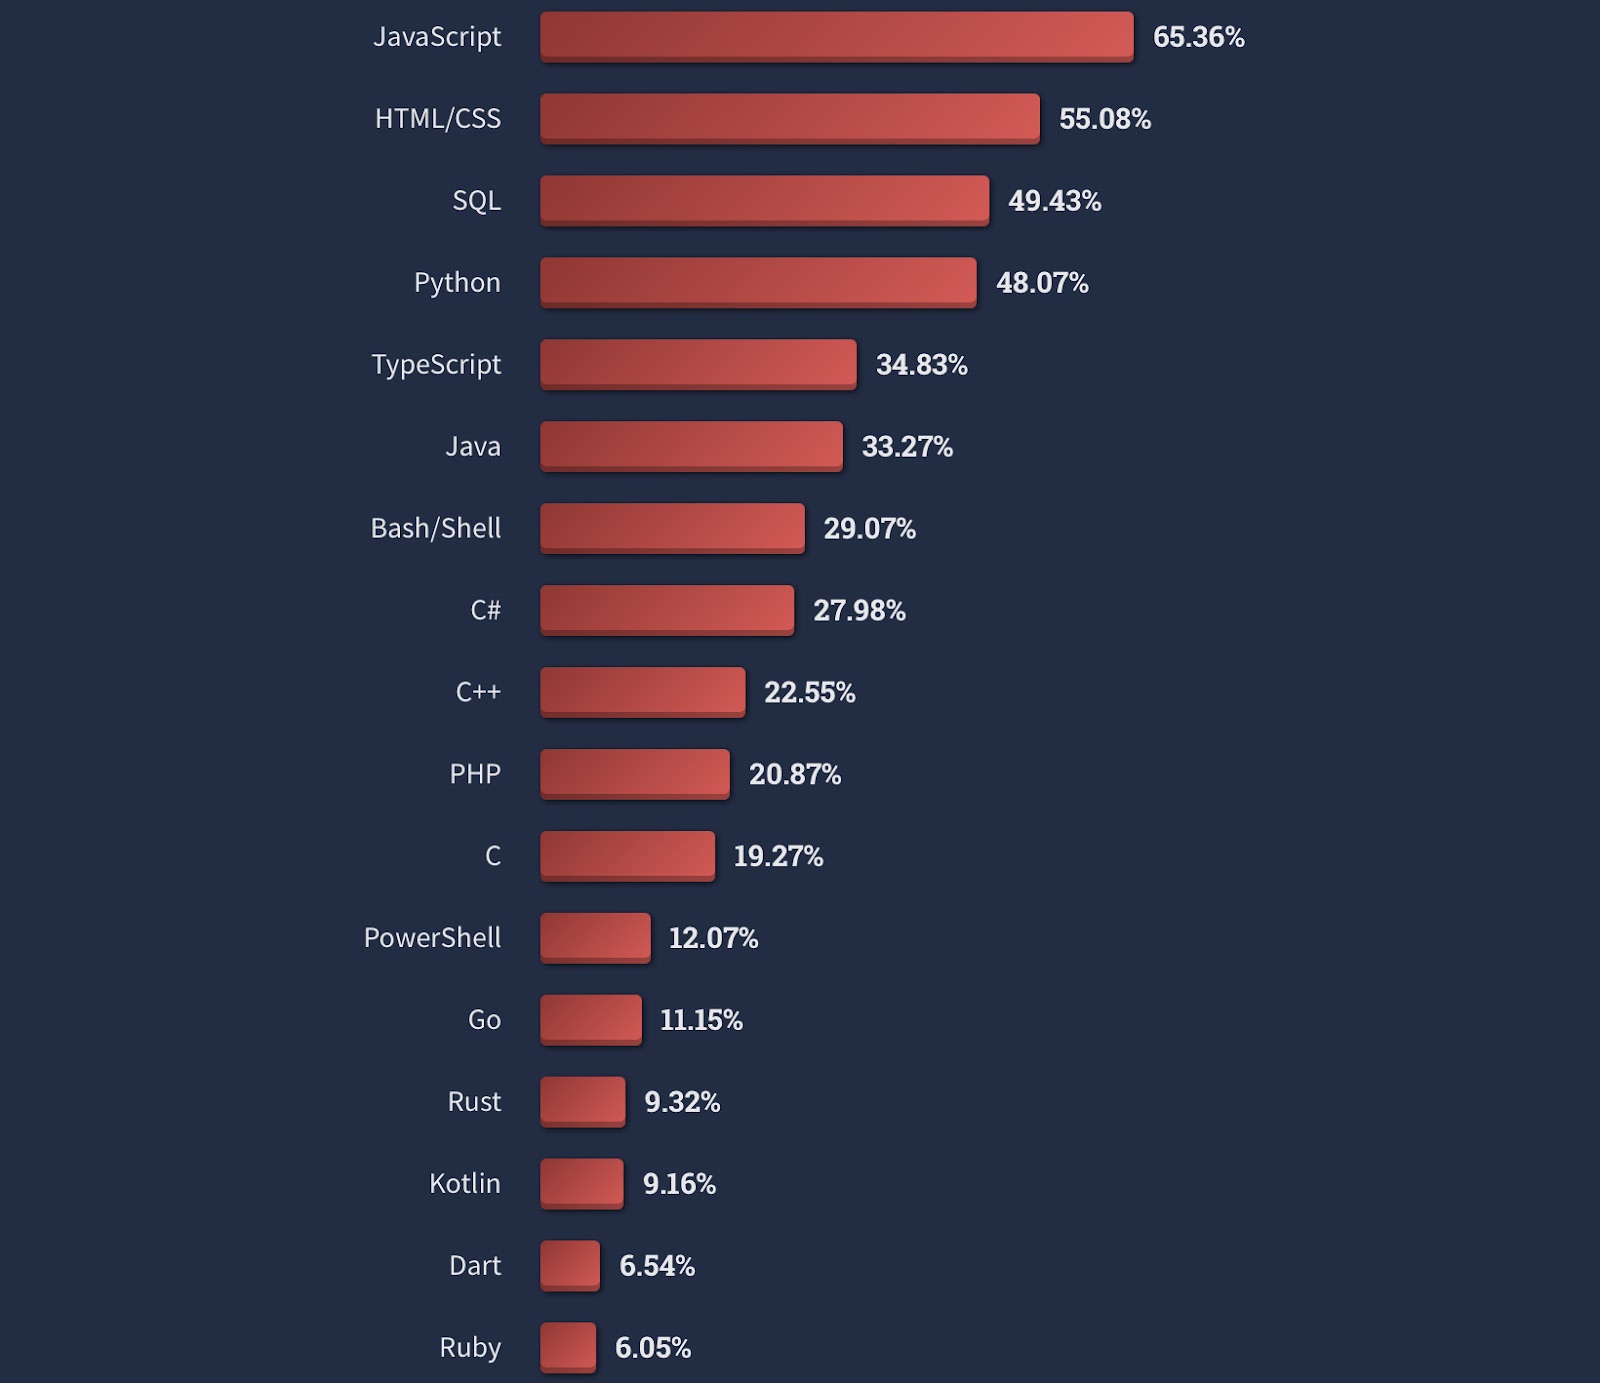 Ruby among TOP-20 programming languages